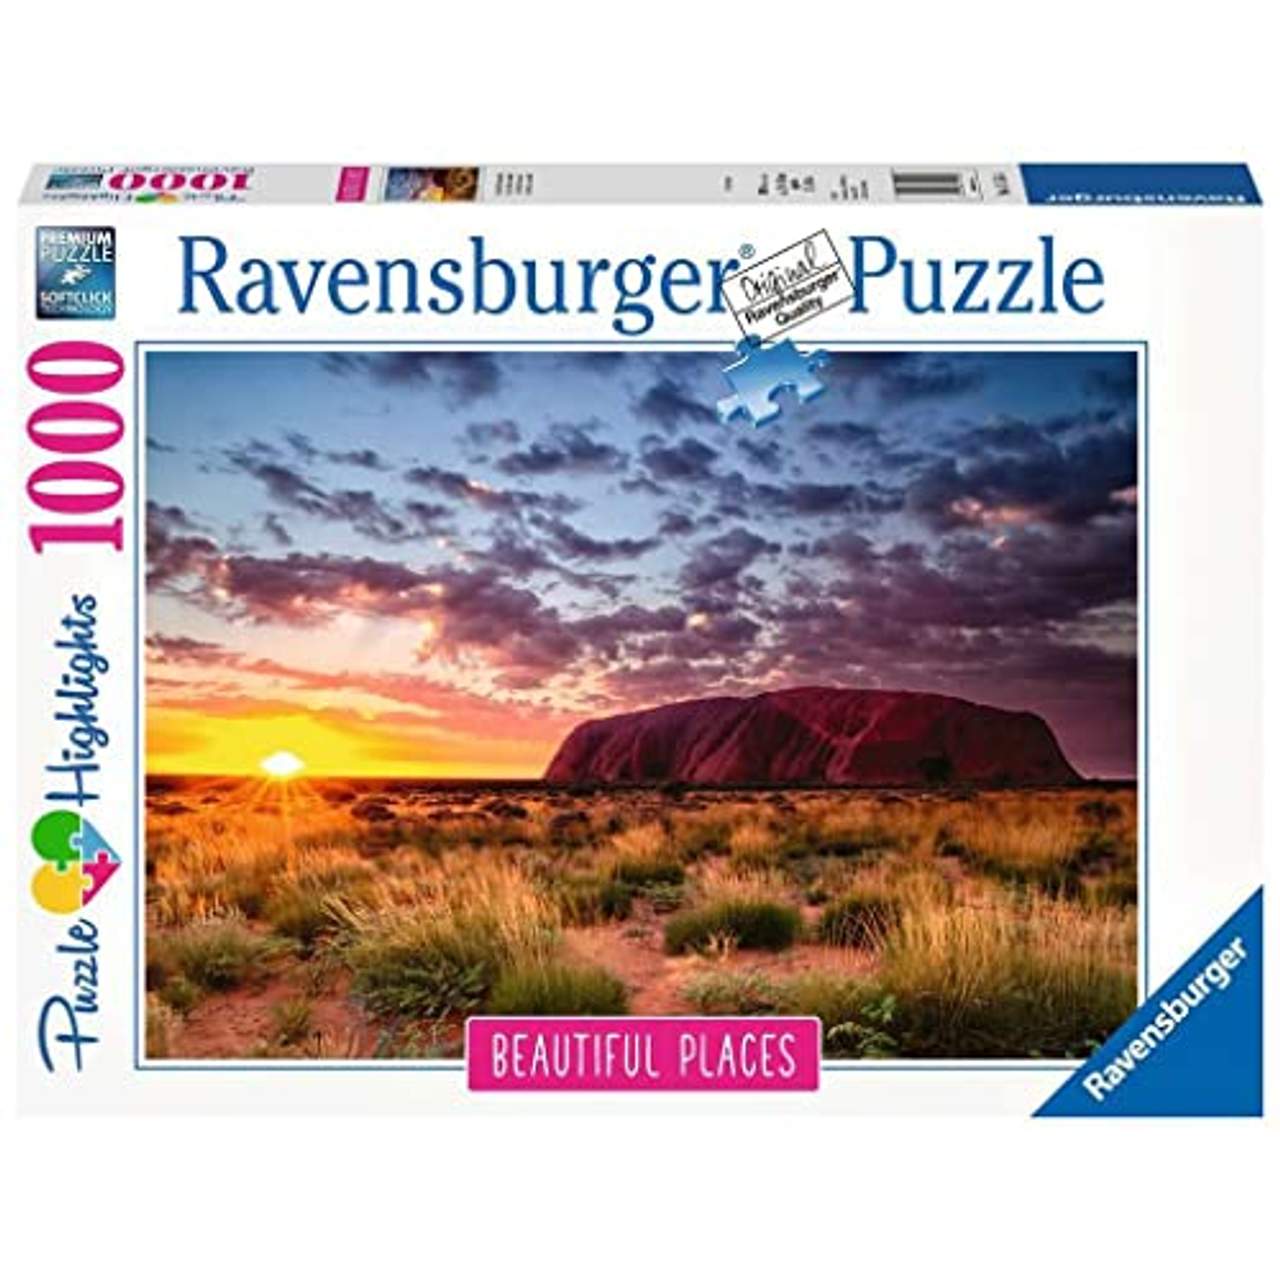 Ravensburger Puzzle 15155 Ayers Rock in Australien